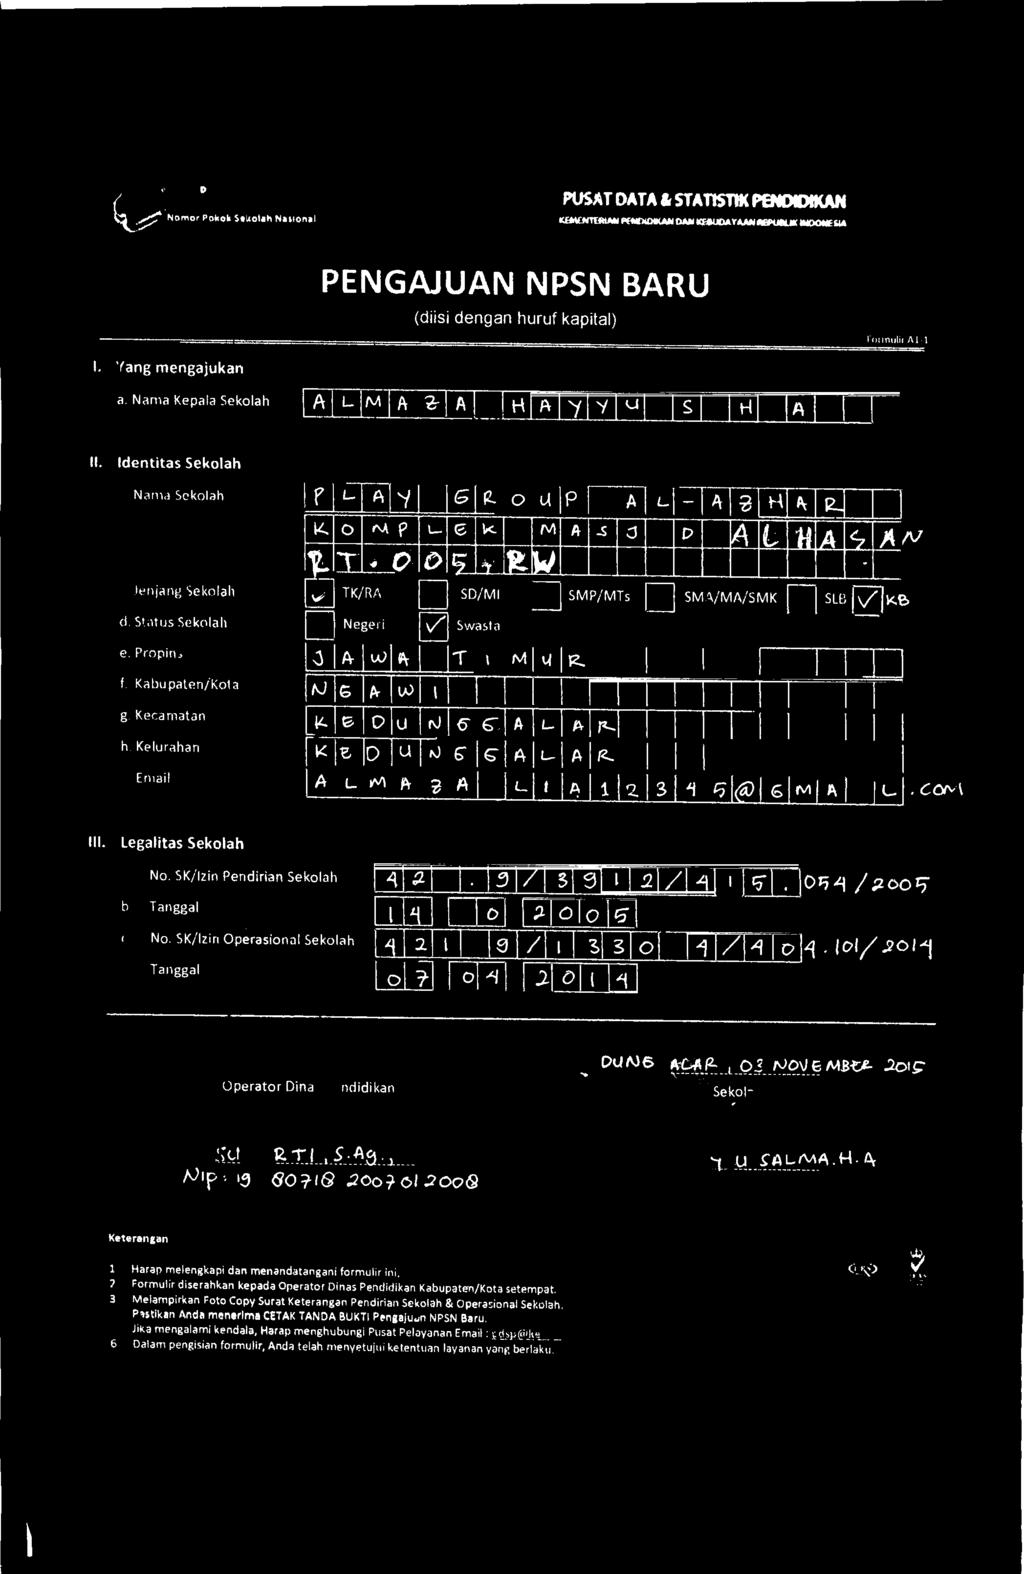 Nervier Pokel, Setelea National PUSAT DATA & STAMM( PENNIMAN KEINClagetral POWWOW/ DAY KISUDAYAANNEPUSEK INDONESIA PENGAJUAN NPSN BARU (diisi dengan huruf kapital) r0,1,111ill Al 1 I.